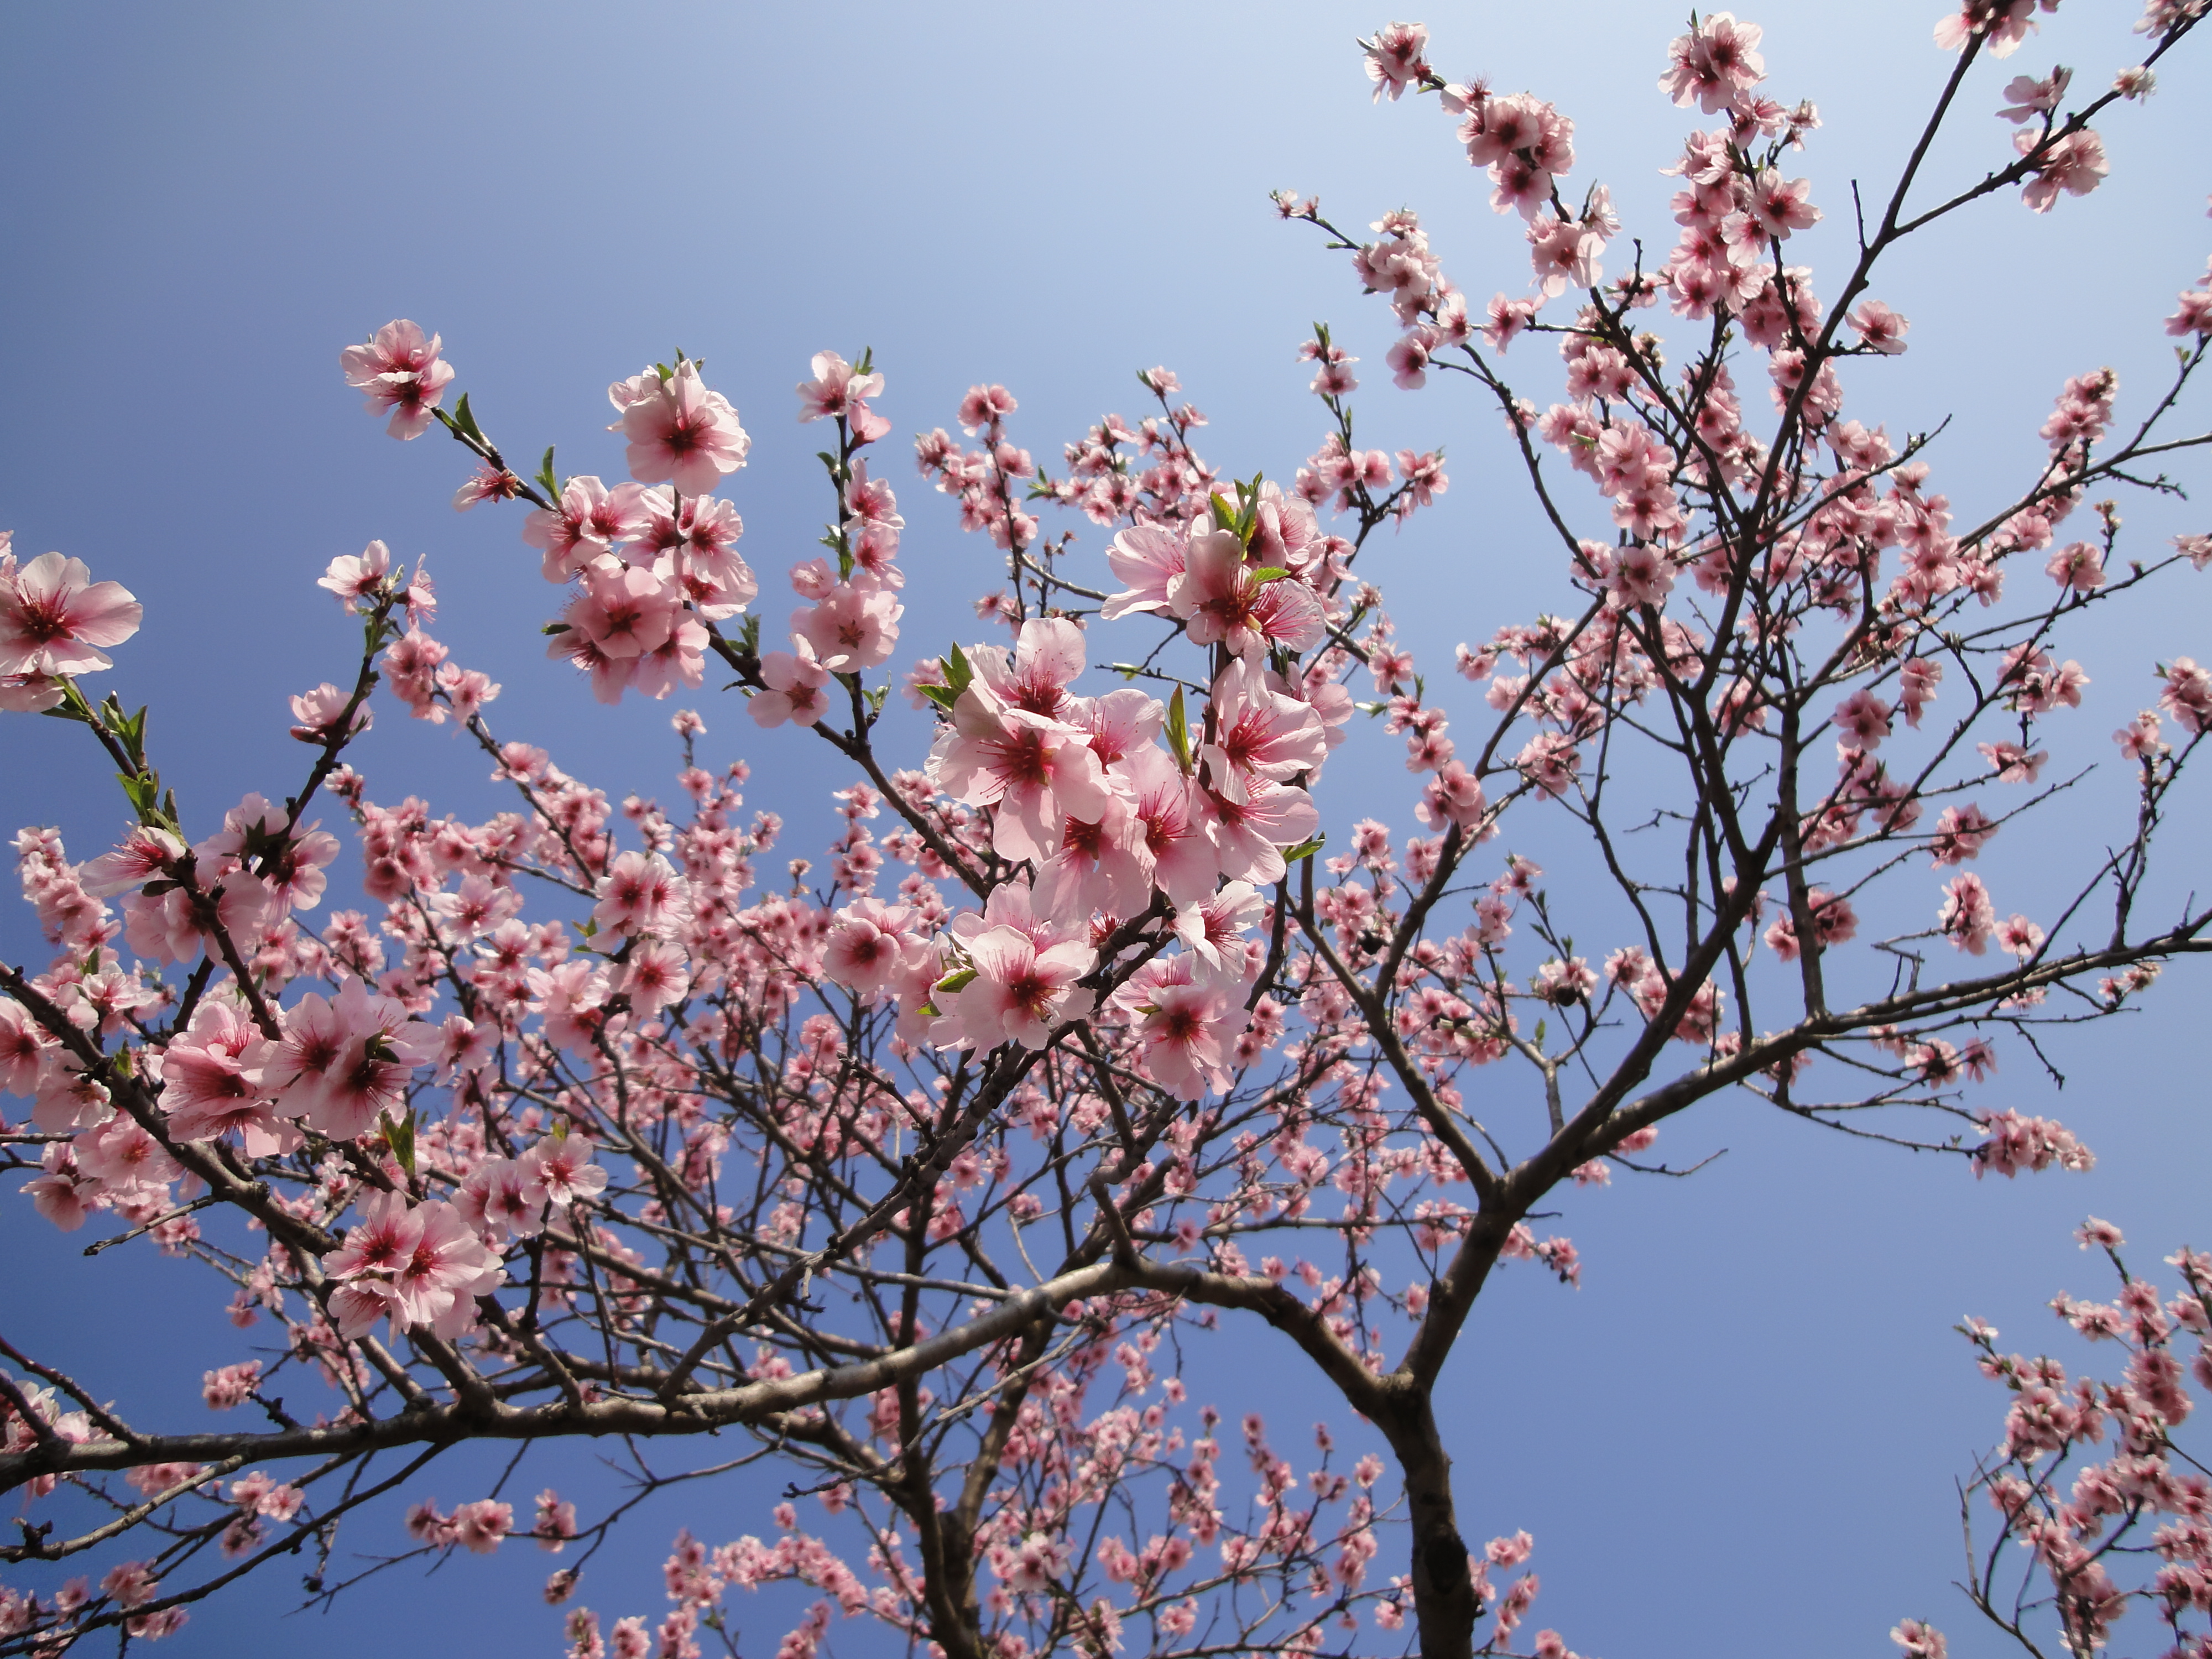 The Weekend :: Mandelblütenfest (Almond Tree Blossom Festival ...